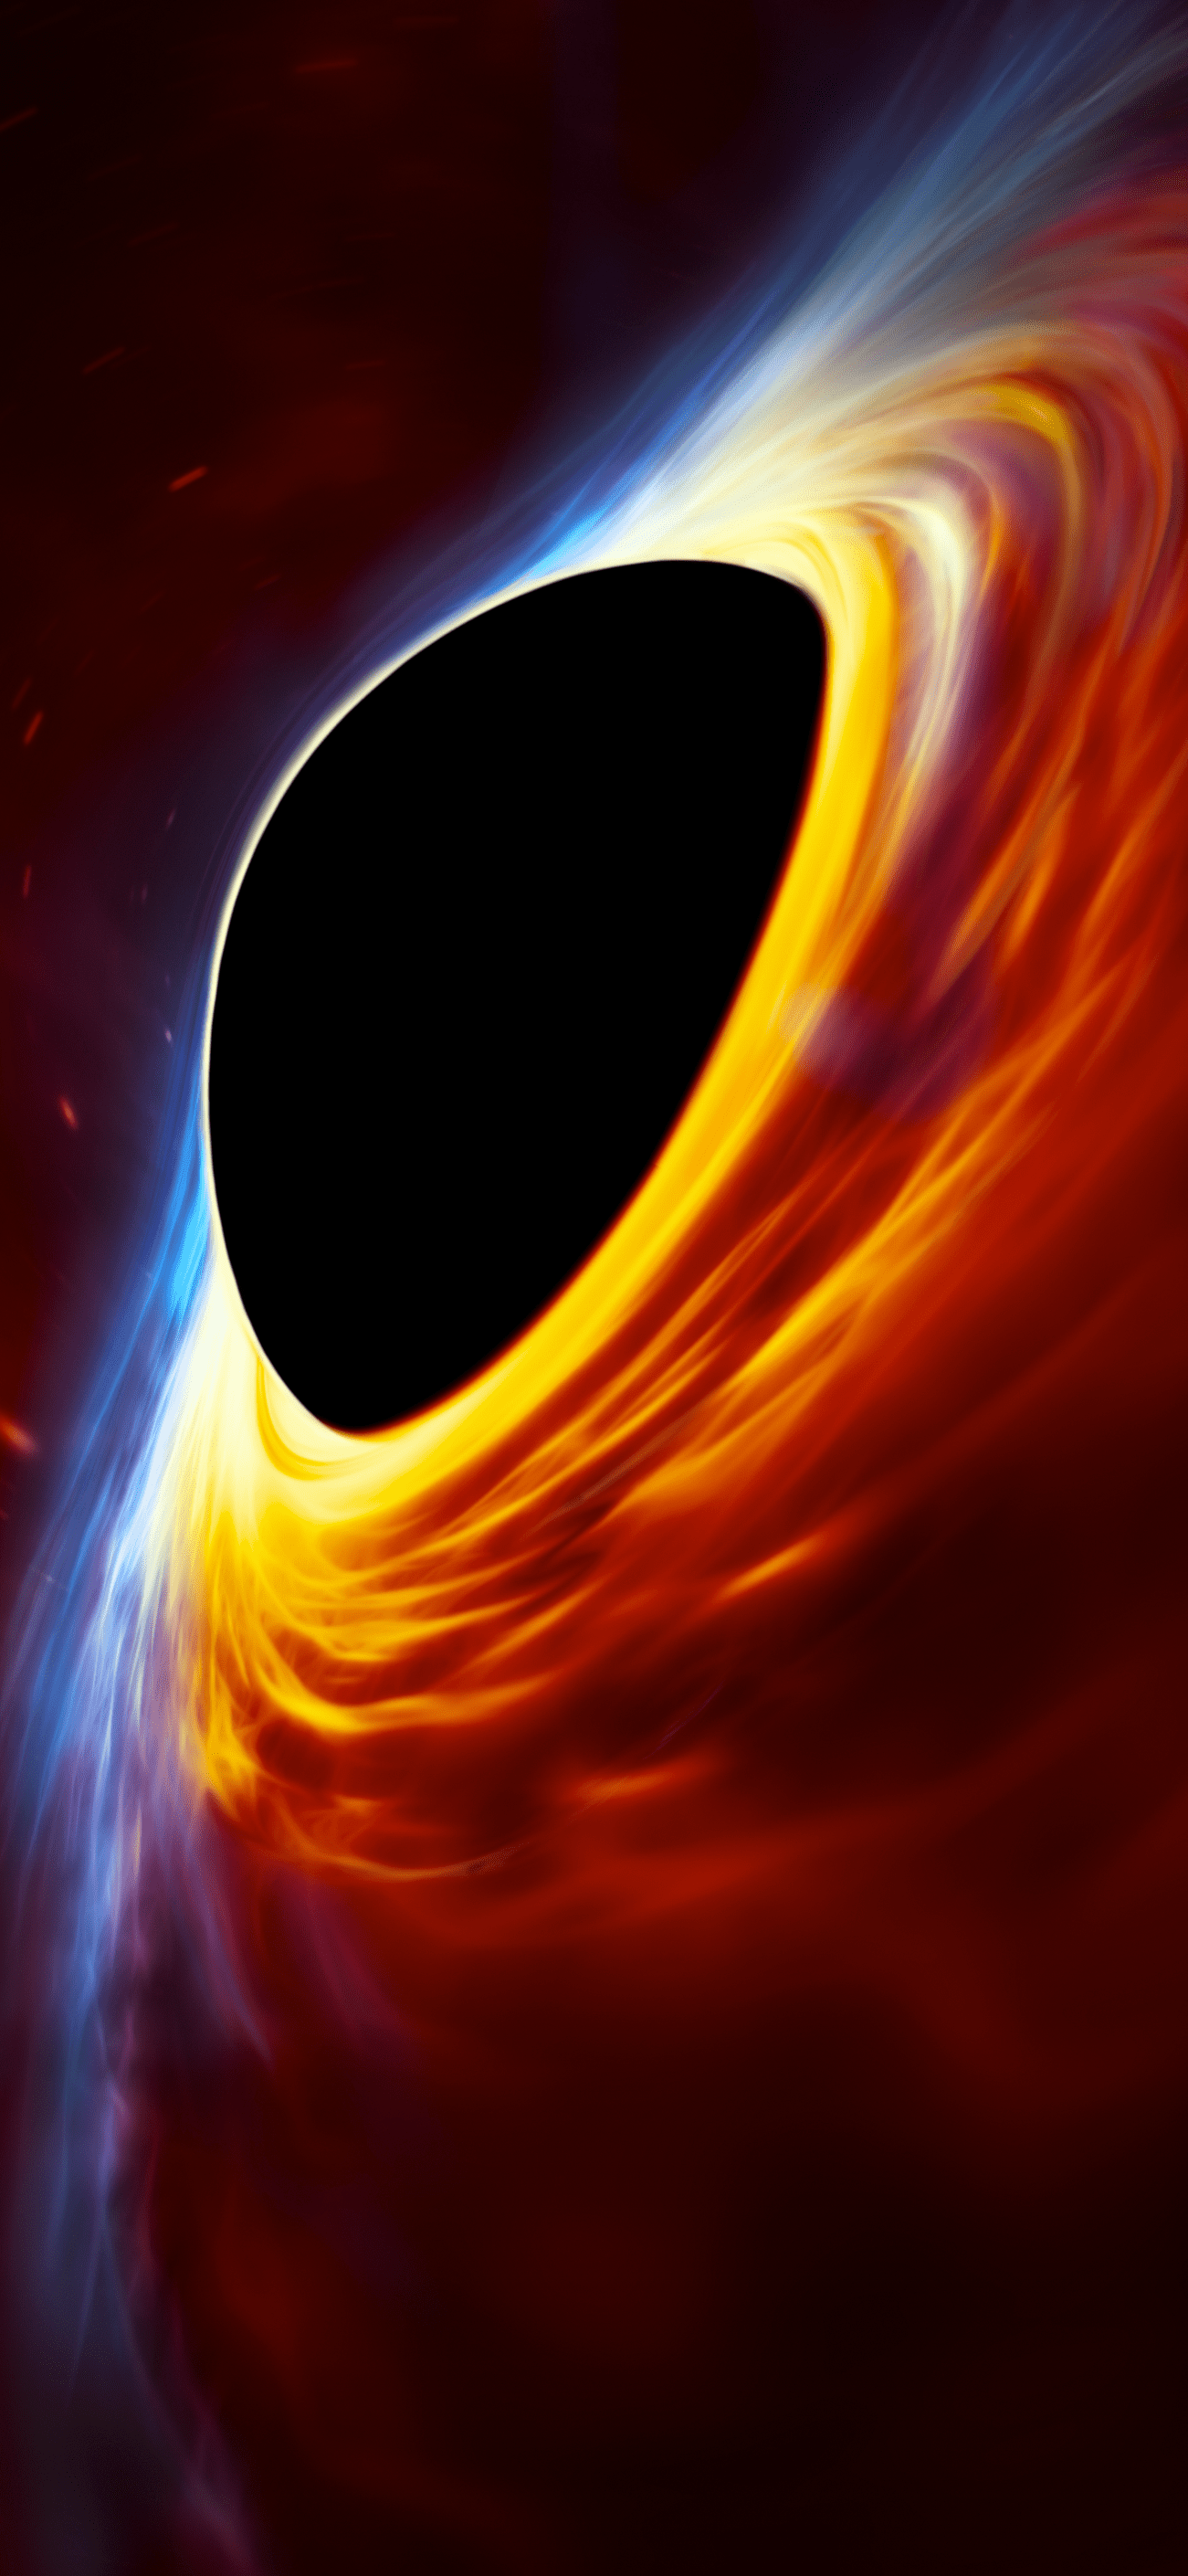 4K Black Hole Wallpaper - iXpap